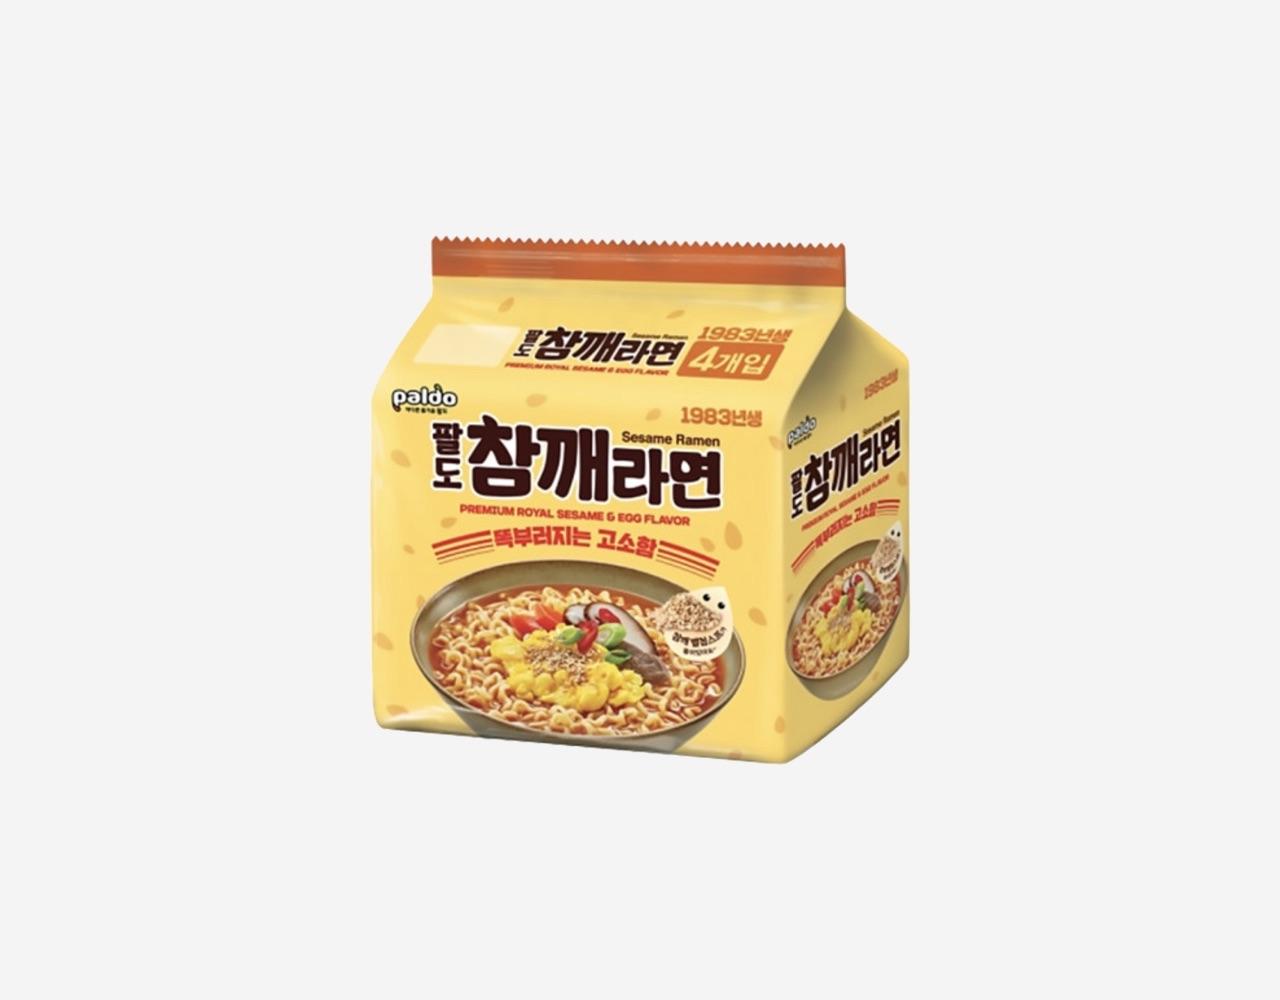 korean brand paldo Sesame Ramen pack 